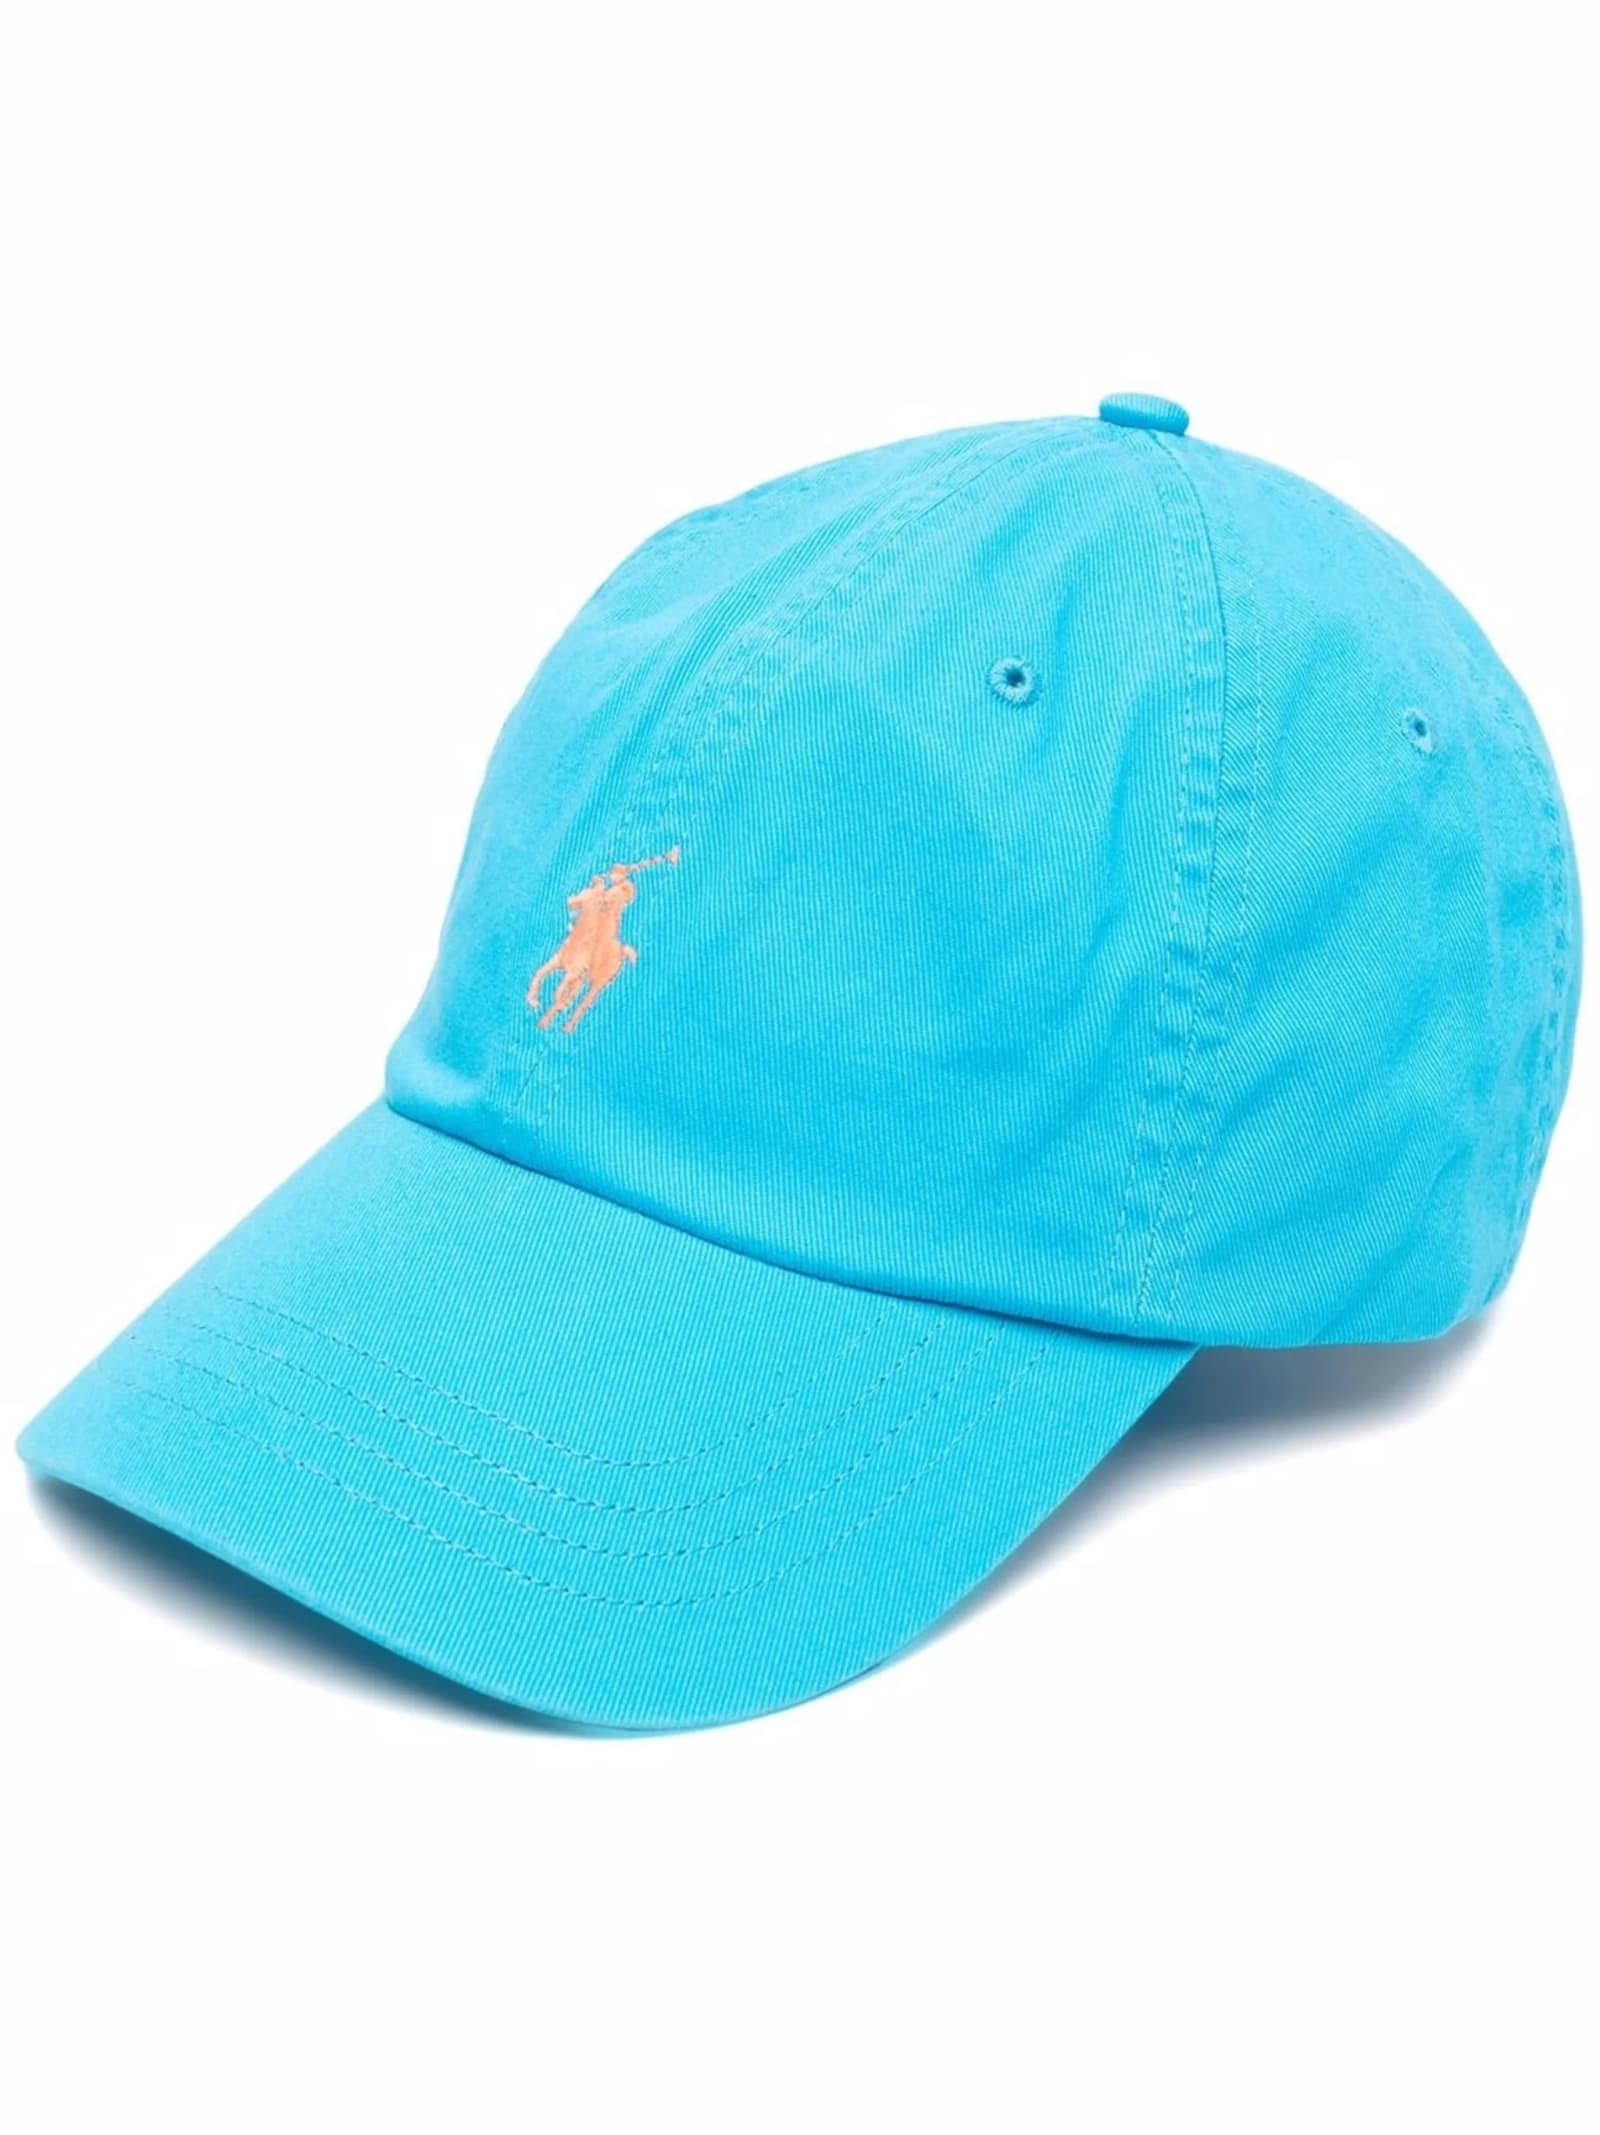 Ralph Lauren Light Blue Baseball Hat With Contrasting Pony